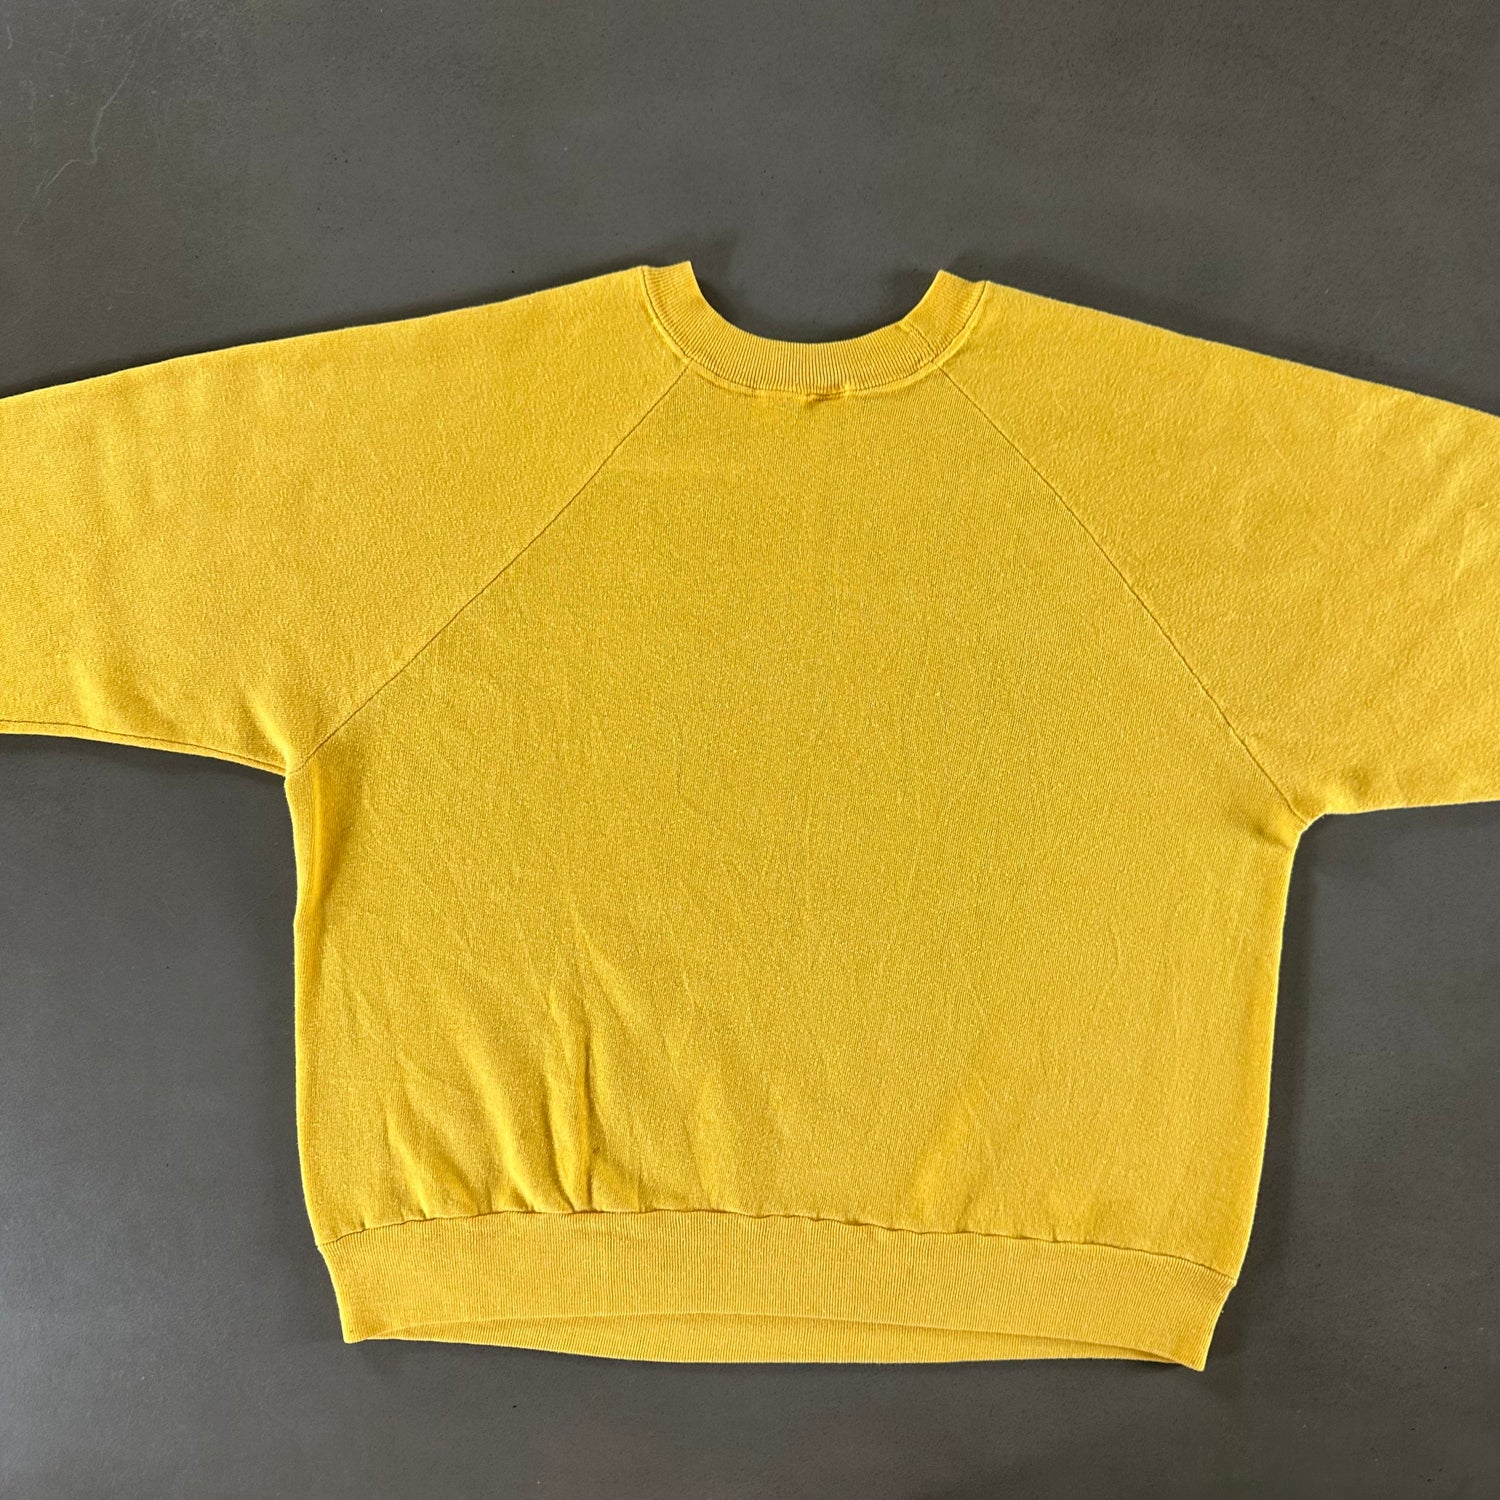 Vintage 1980s Steelers Sweatshirt size Youth XL